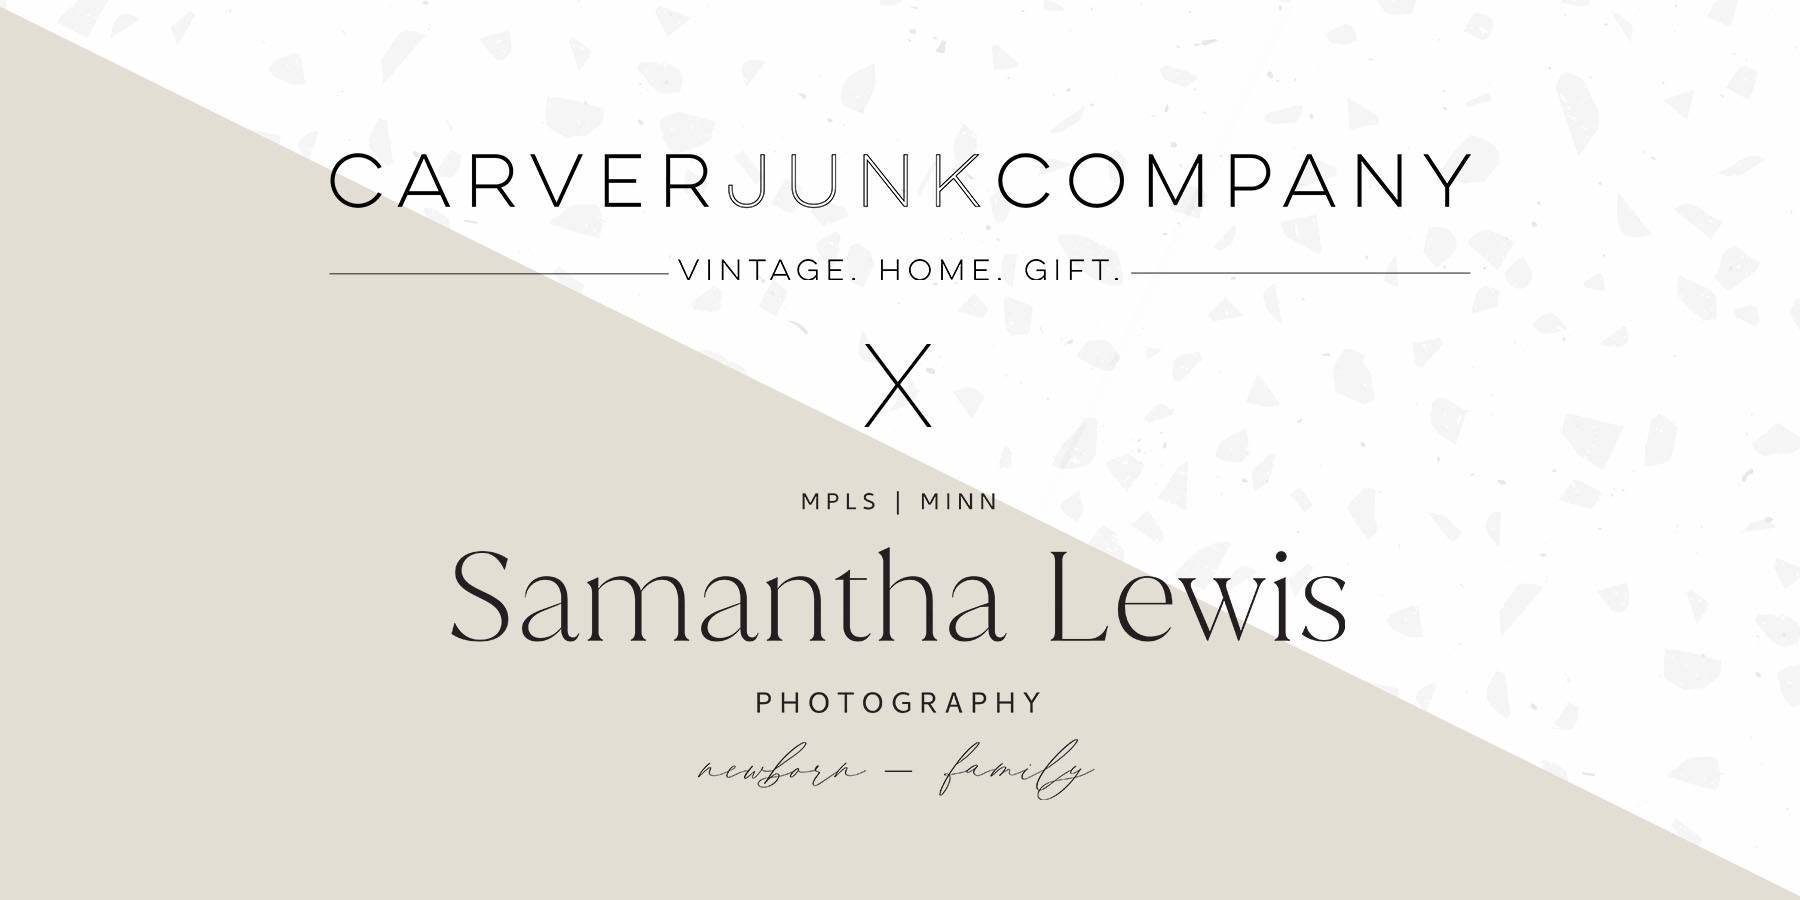 Samantha Lewis Photography, Carver Junk Company, Chaska Minnesota, Family Photo Outfit inspiration